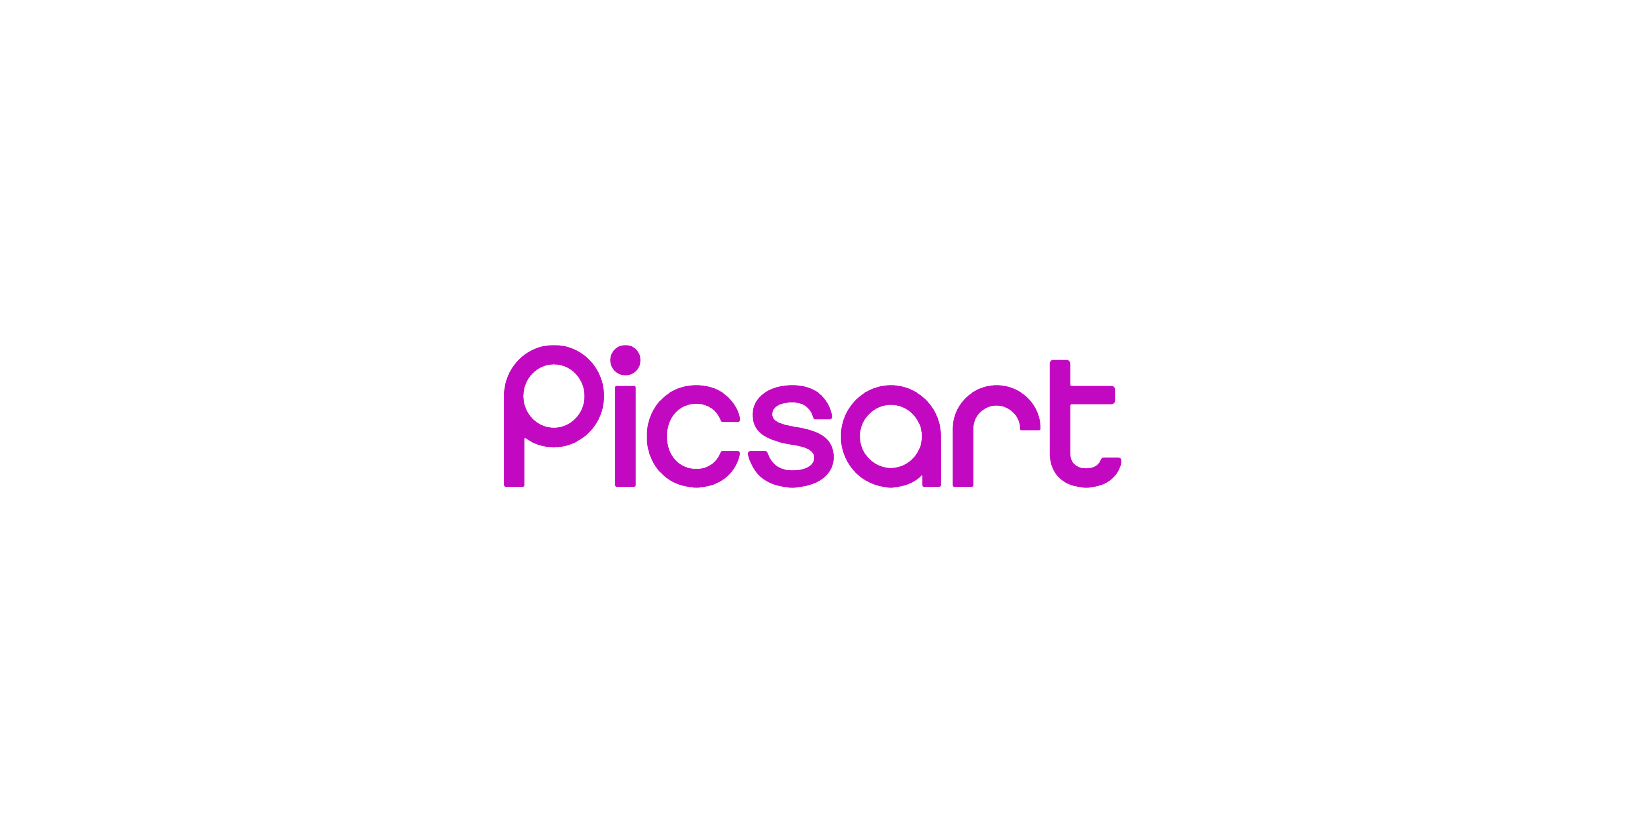 Vision Fund investment portfolio company Picsart's logo